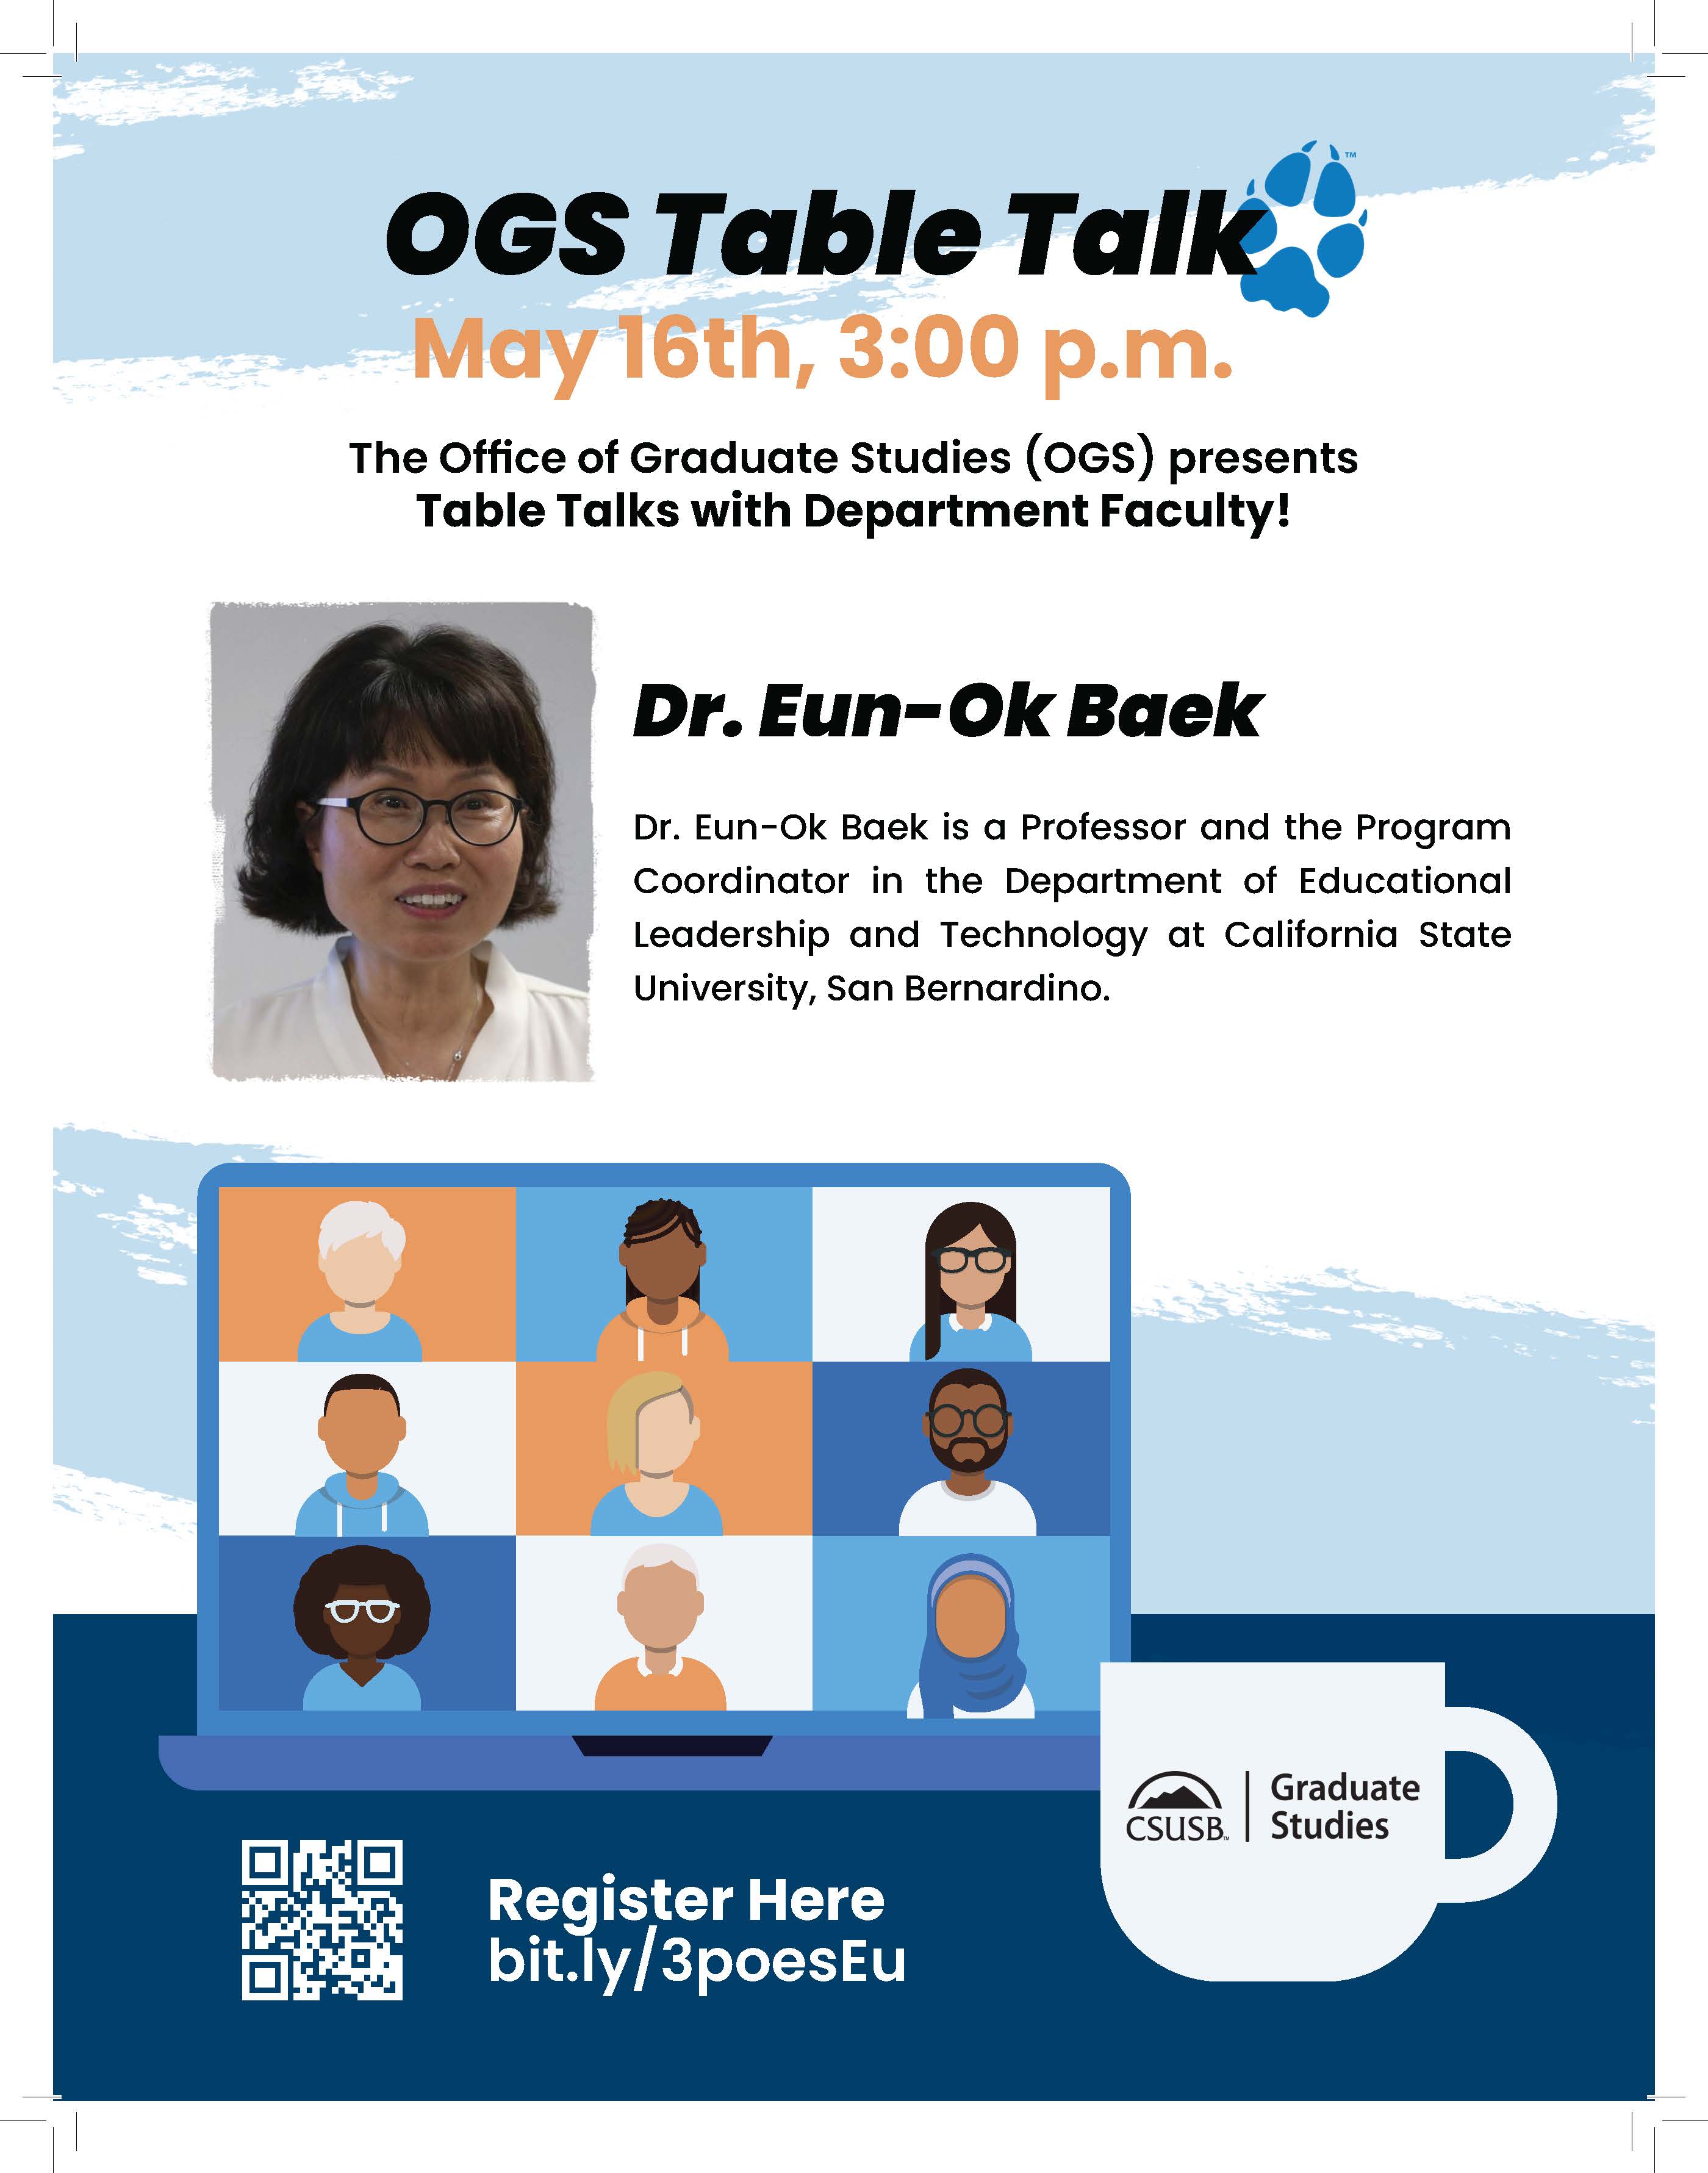 OGS Table Talk - Dr. Eun-Ok Baek